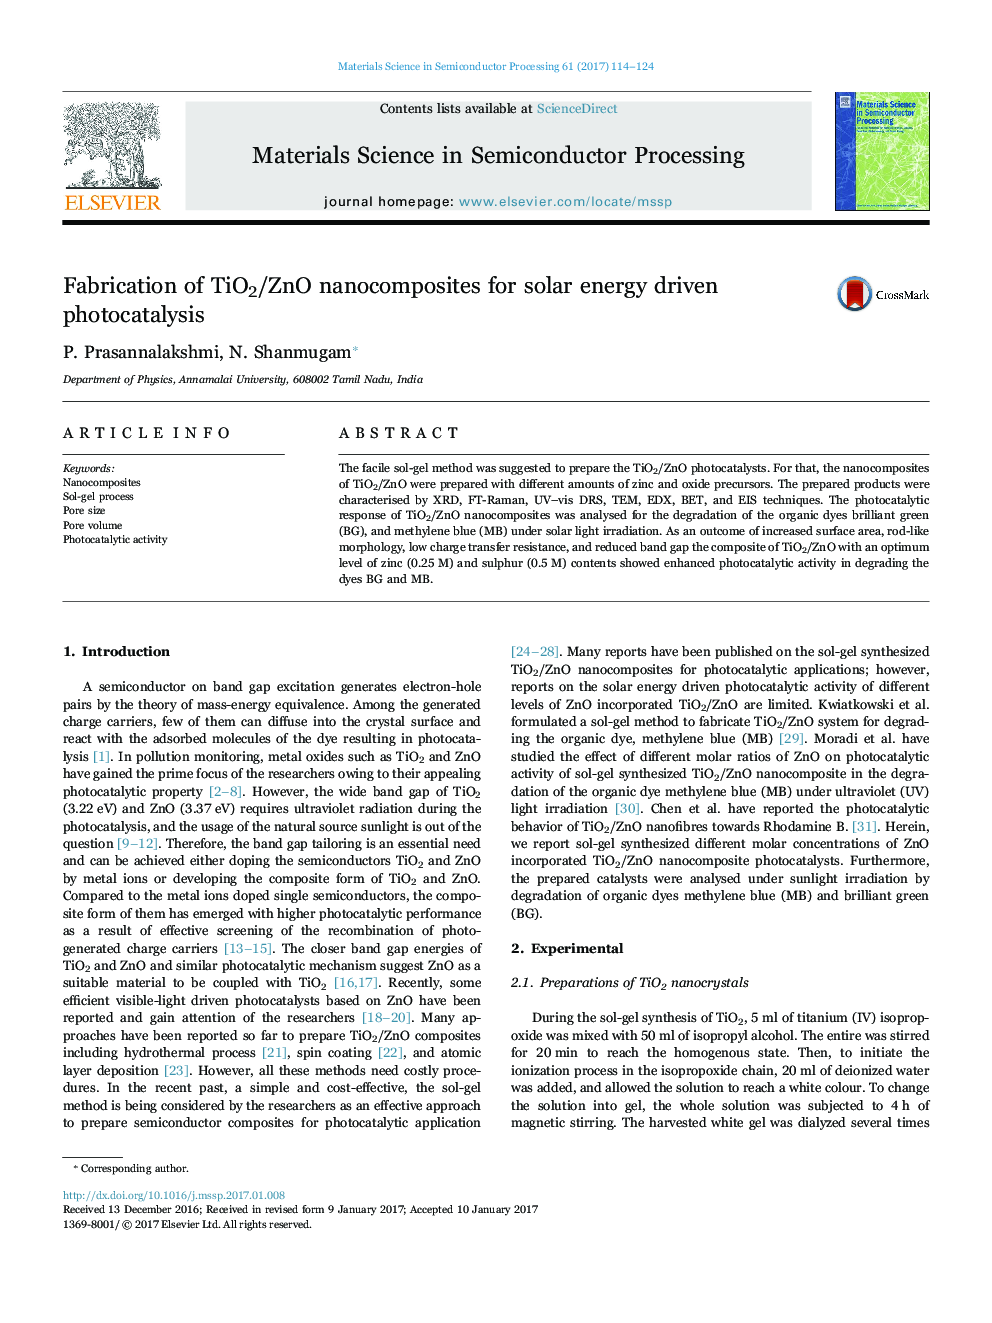 Fabrication of TiO2/ZnO nanocomposites for solar energy driven photocatalysis